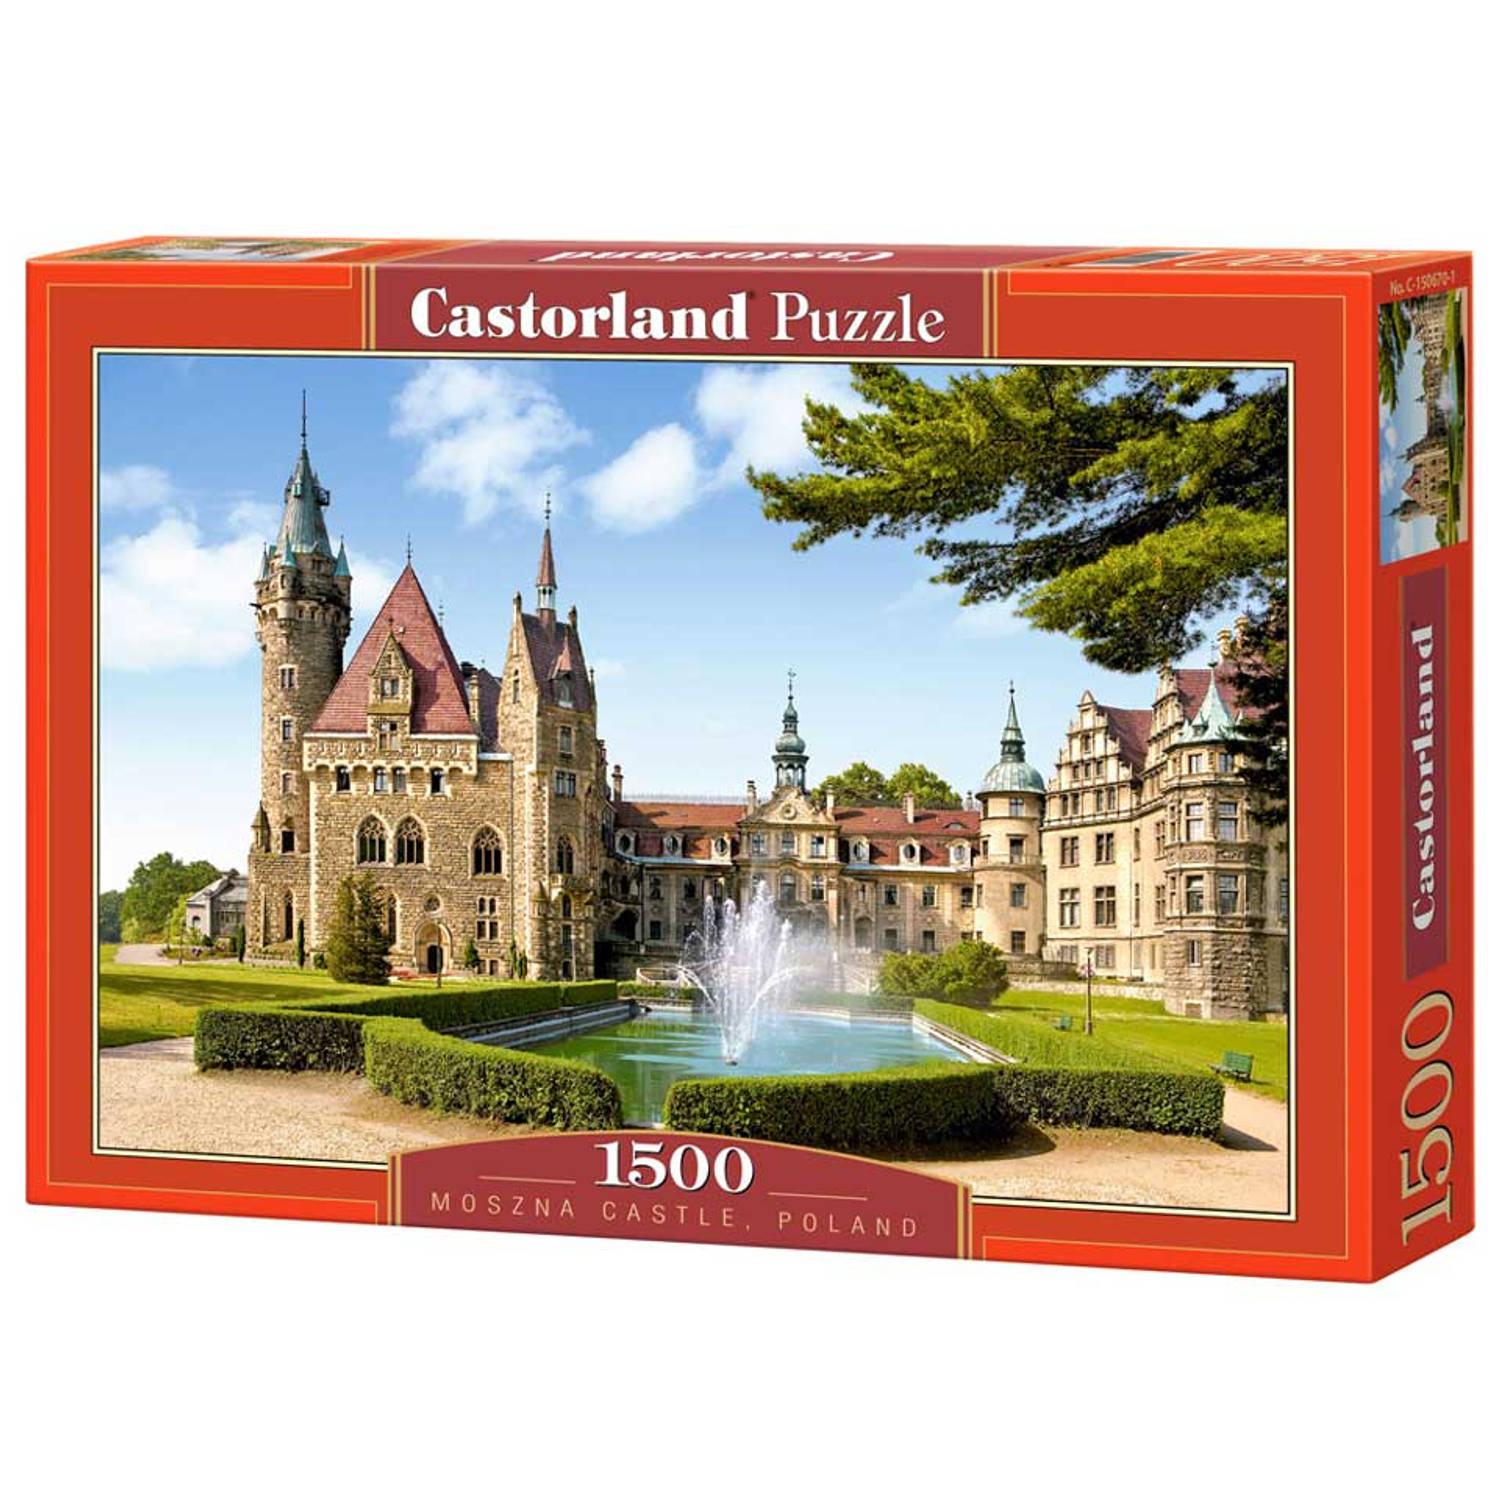 Moszna Castle Poland puzzel 1500 stukjes